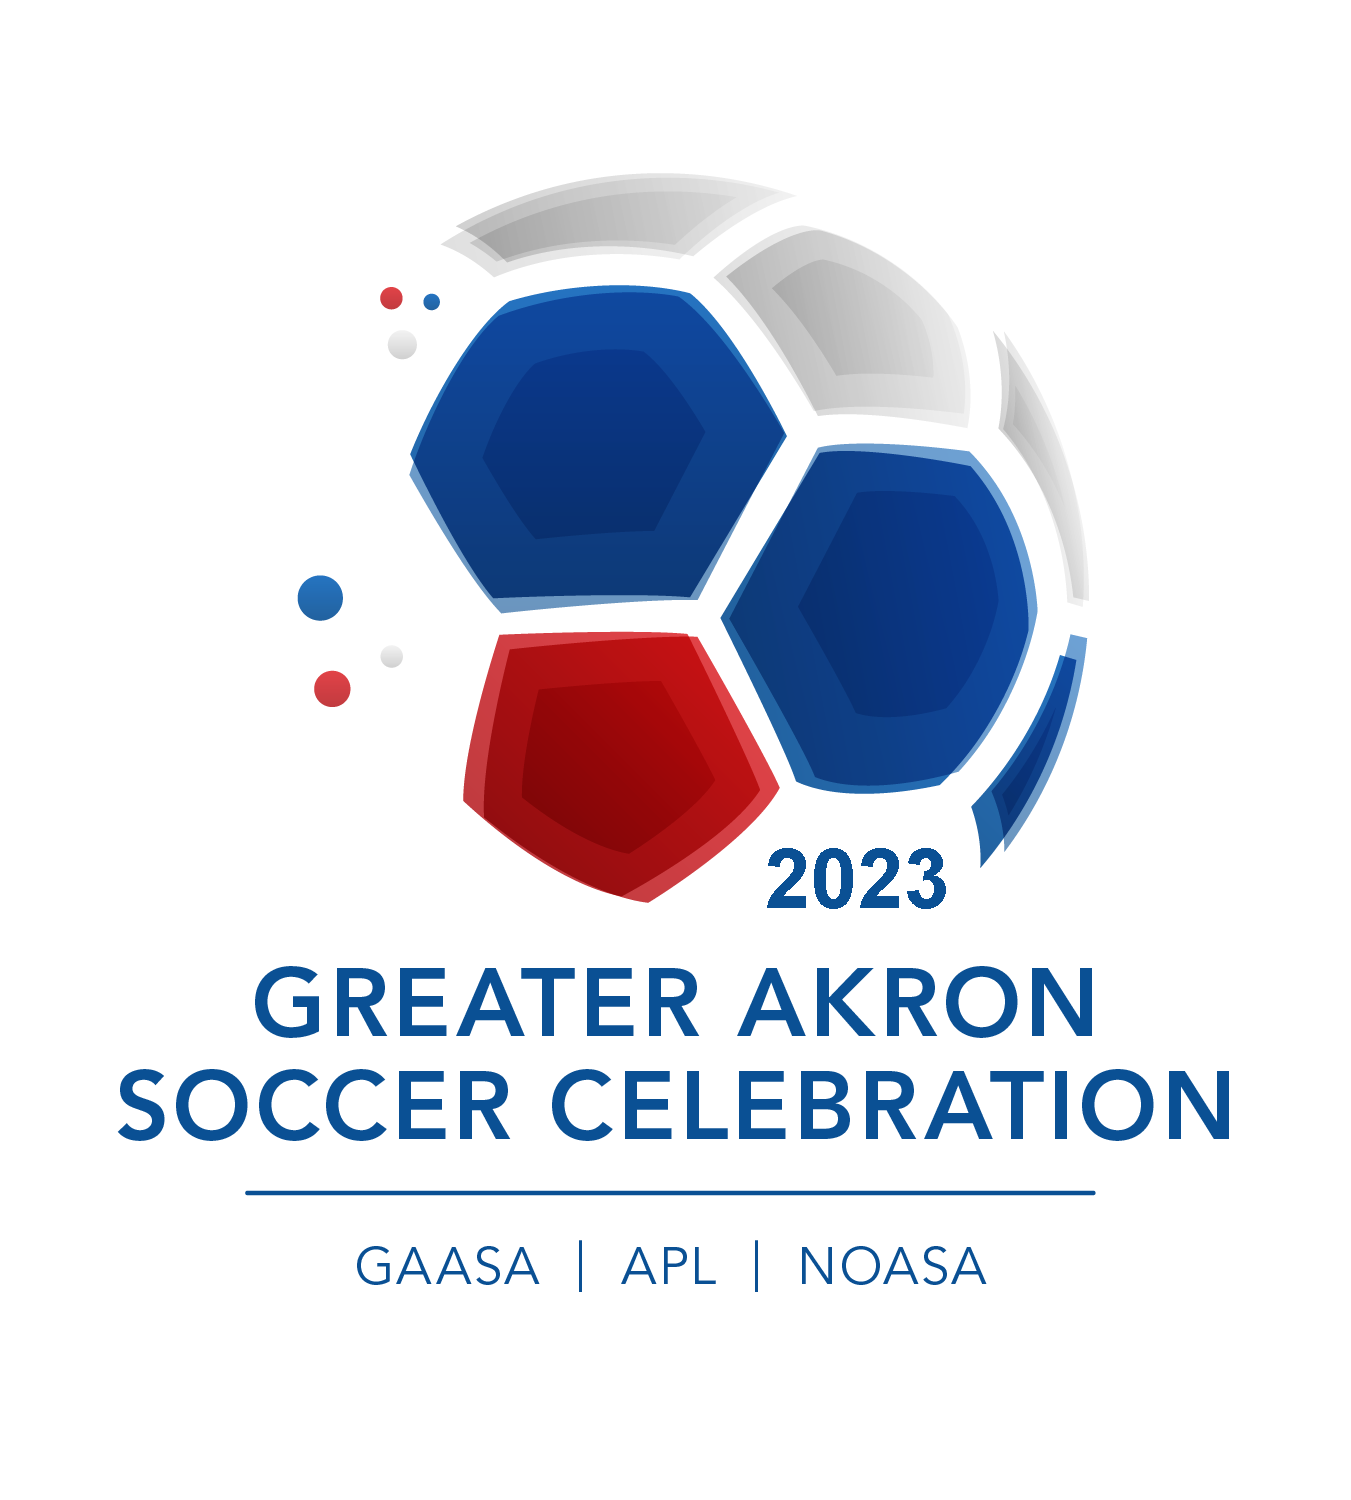 GASC - Greater Akron Soccer Celebration